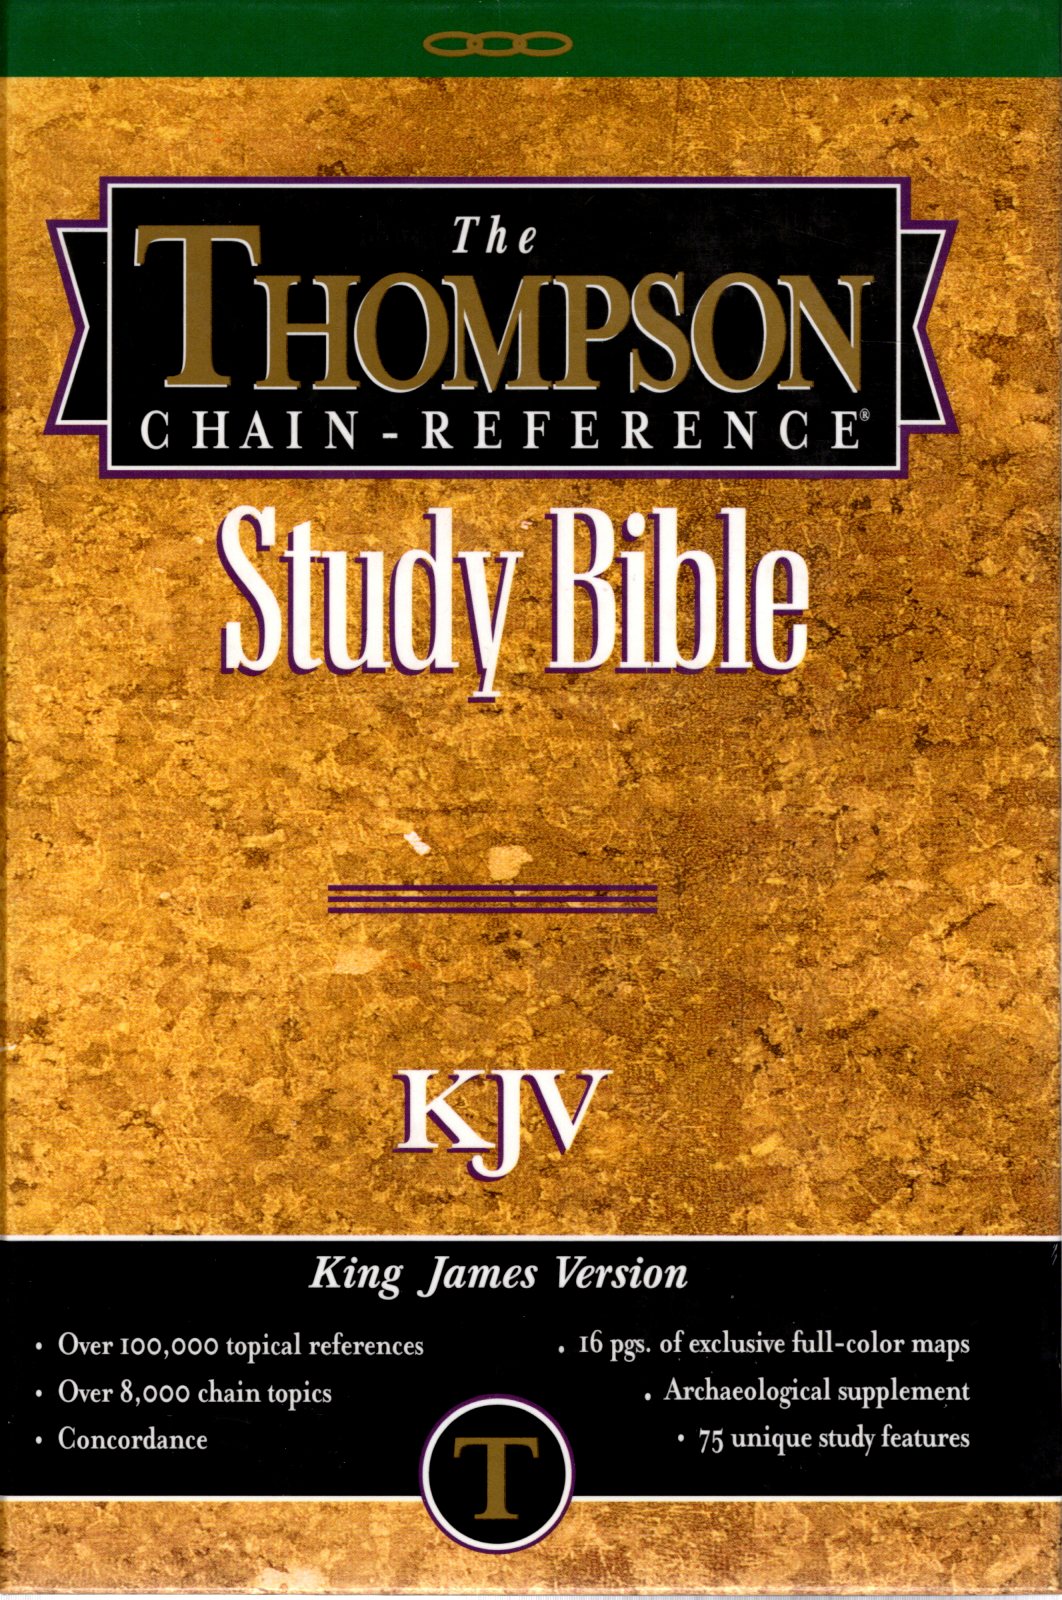 Kirkbride Bible Co. Inc. KJV The Thompson® Chain-Reference® Study Bible - Hardcover